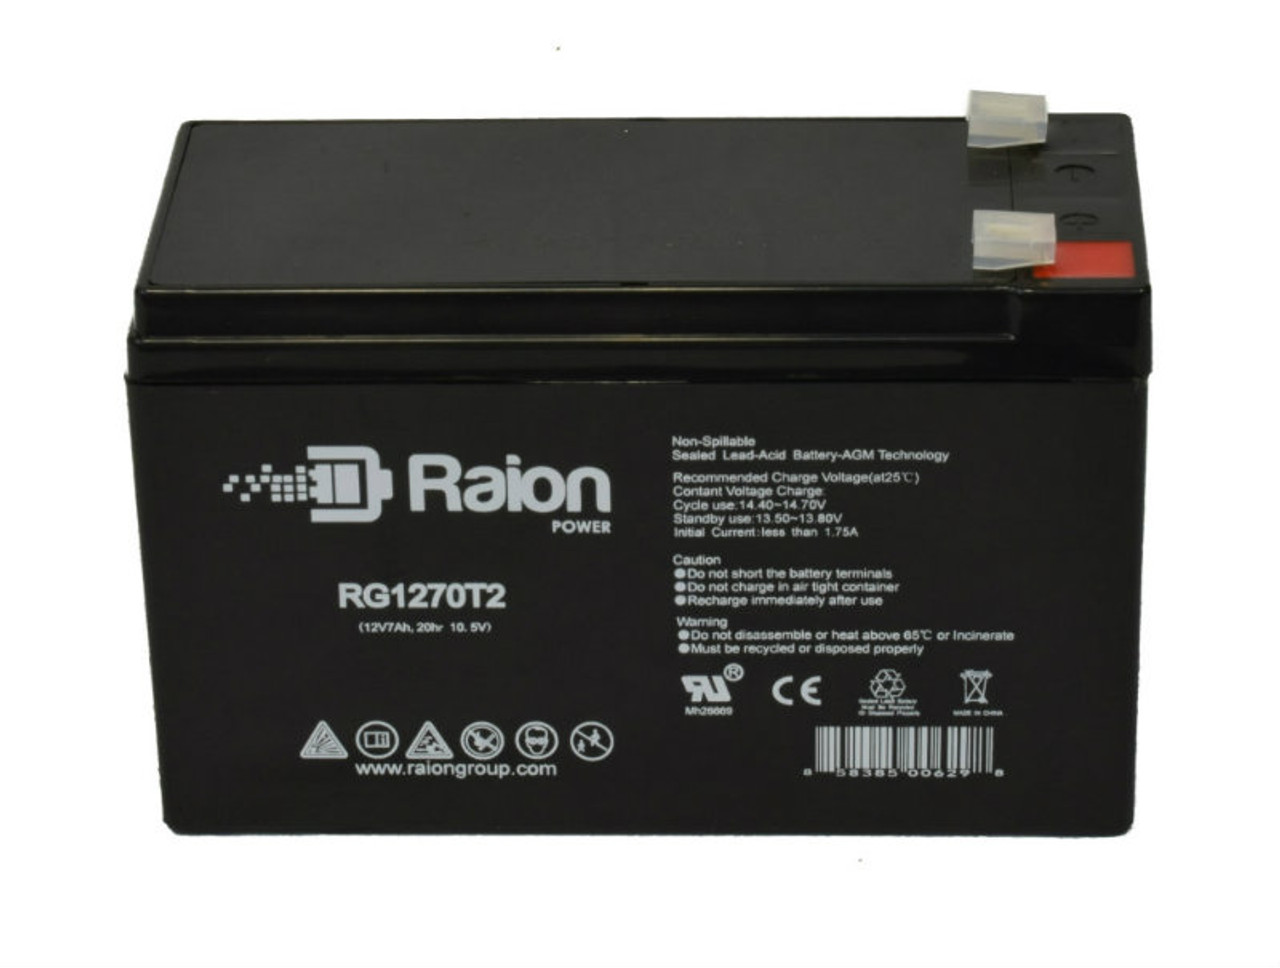 Raion Power RG1270T2 12V 7Ah Lead Acid Battery for Razor 15130651 Pocket Mod Hanna Montana